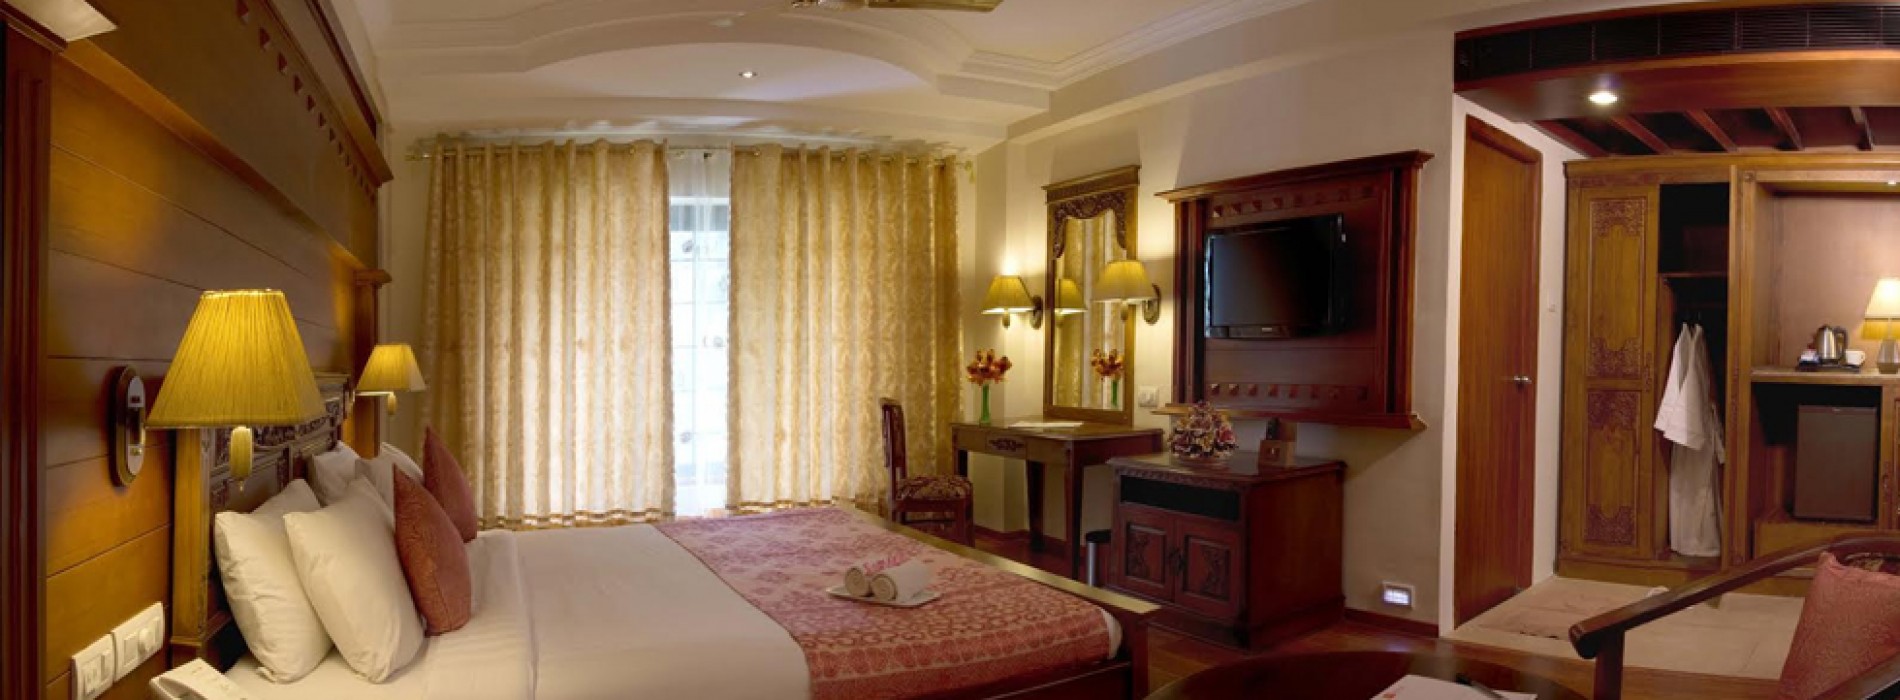 JC Residency Resorts in Kodai & Madurai affiliate with RCI